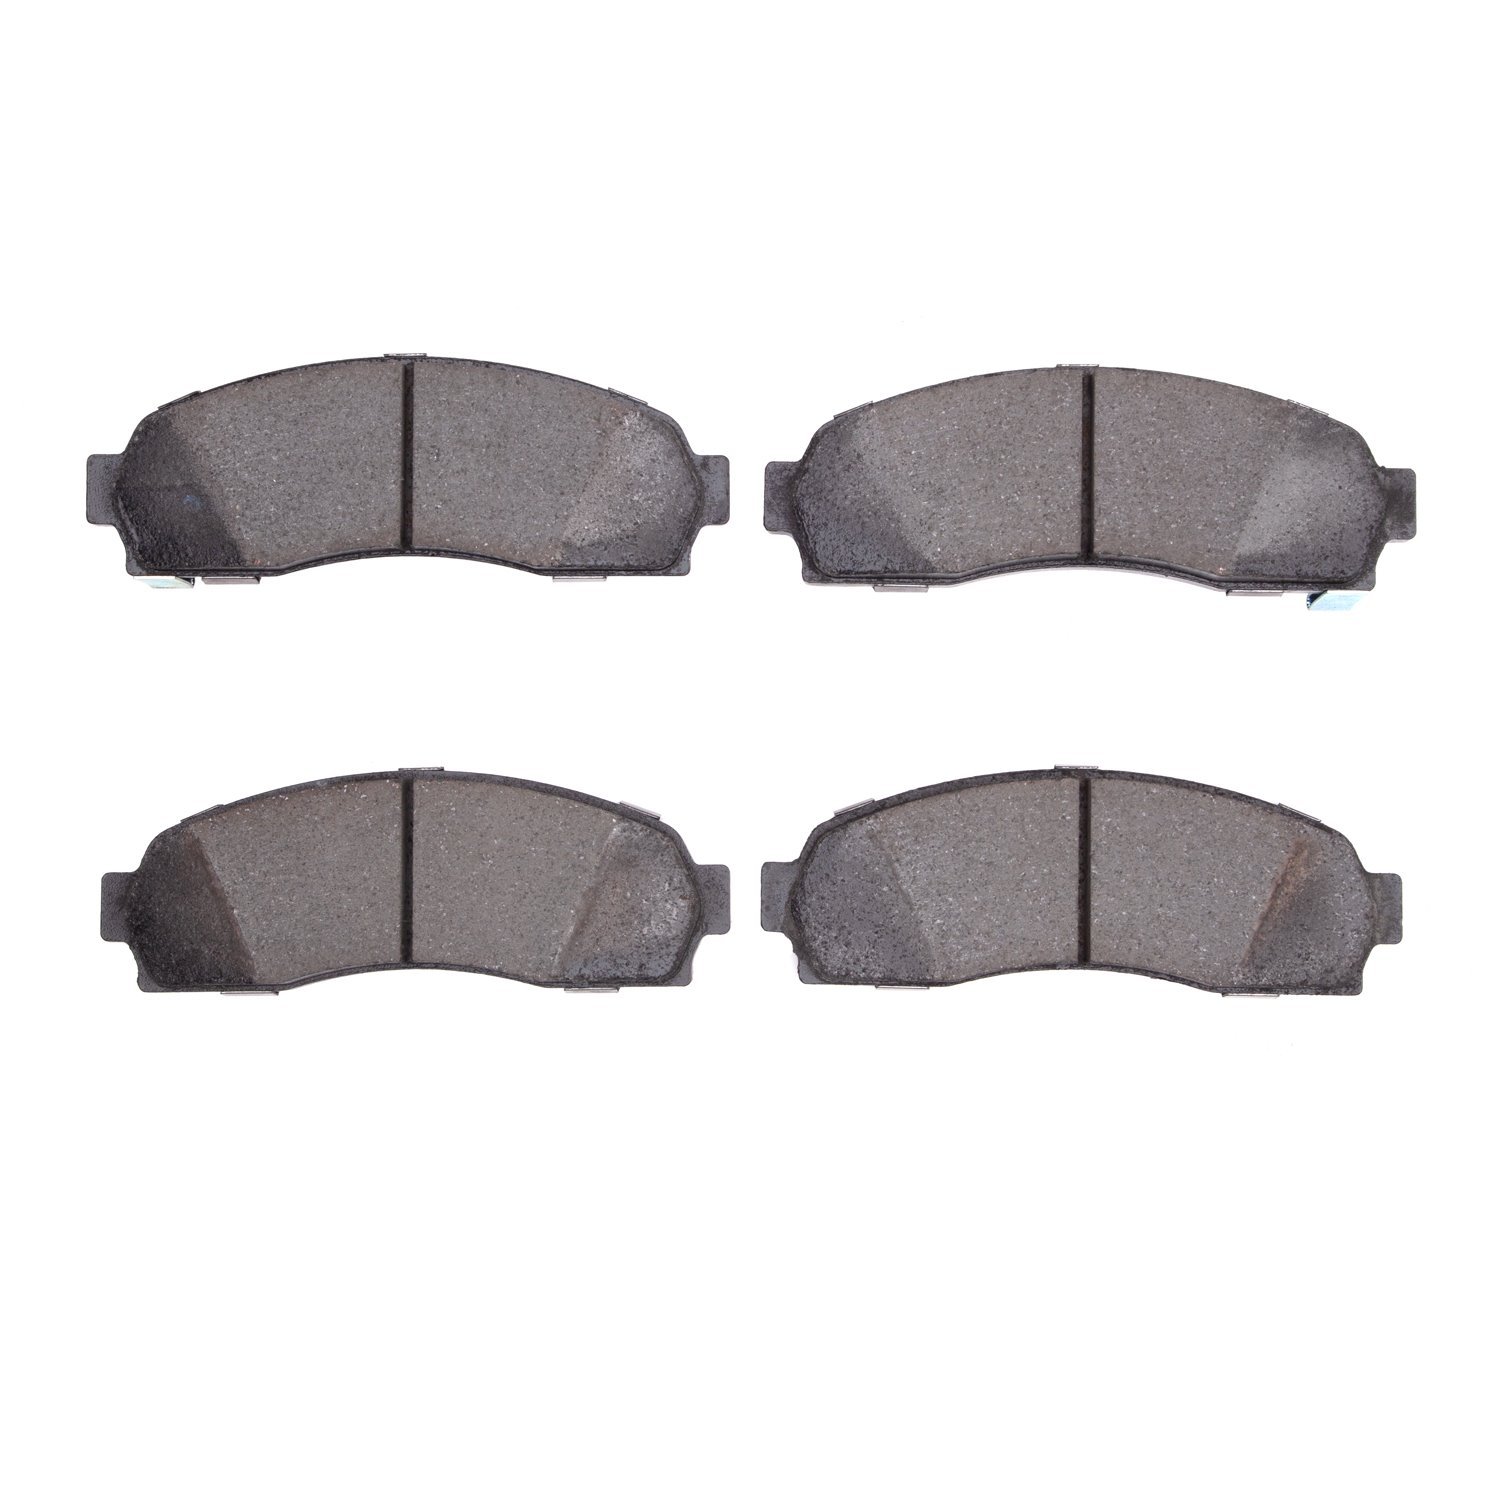 Semi-Metallic Brake Pads, 2001-2012 Fits Multiple Makes/Models, Position: Front